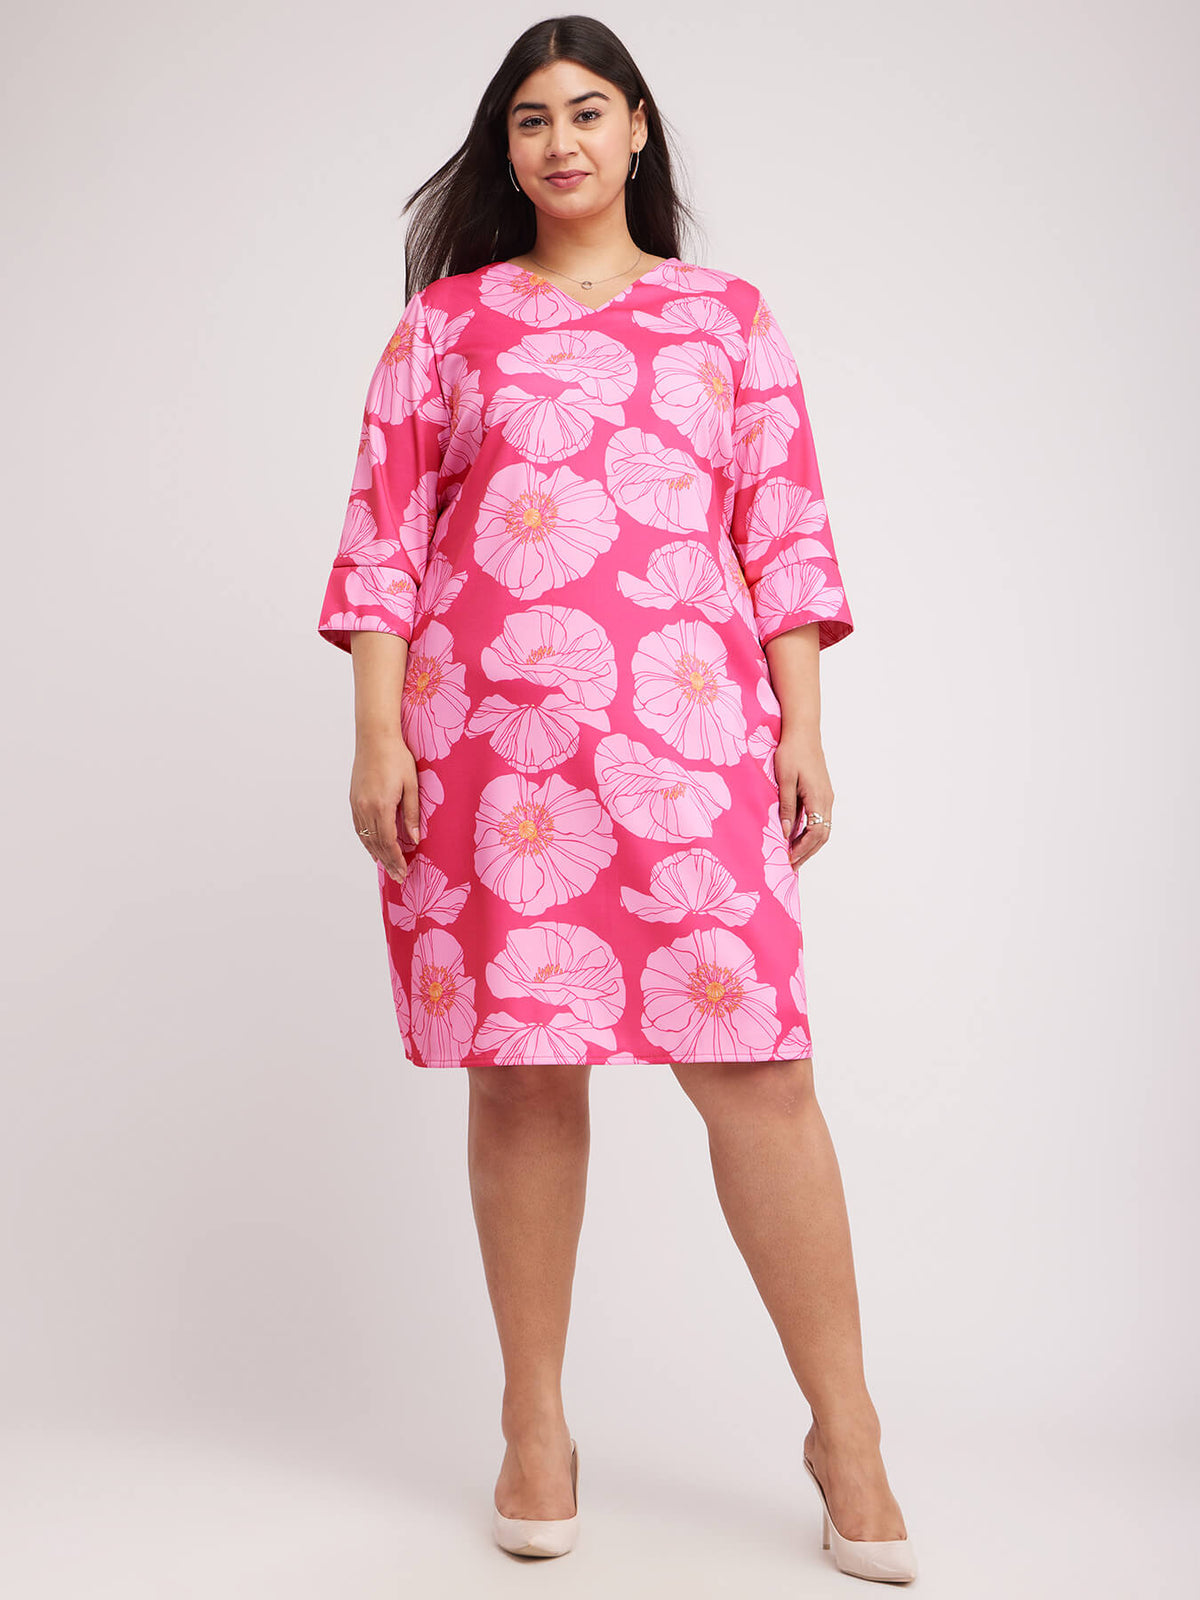 Floral Print Shift Dress - Pink